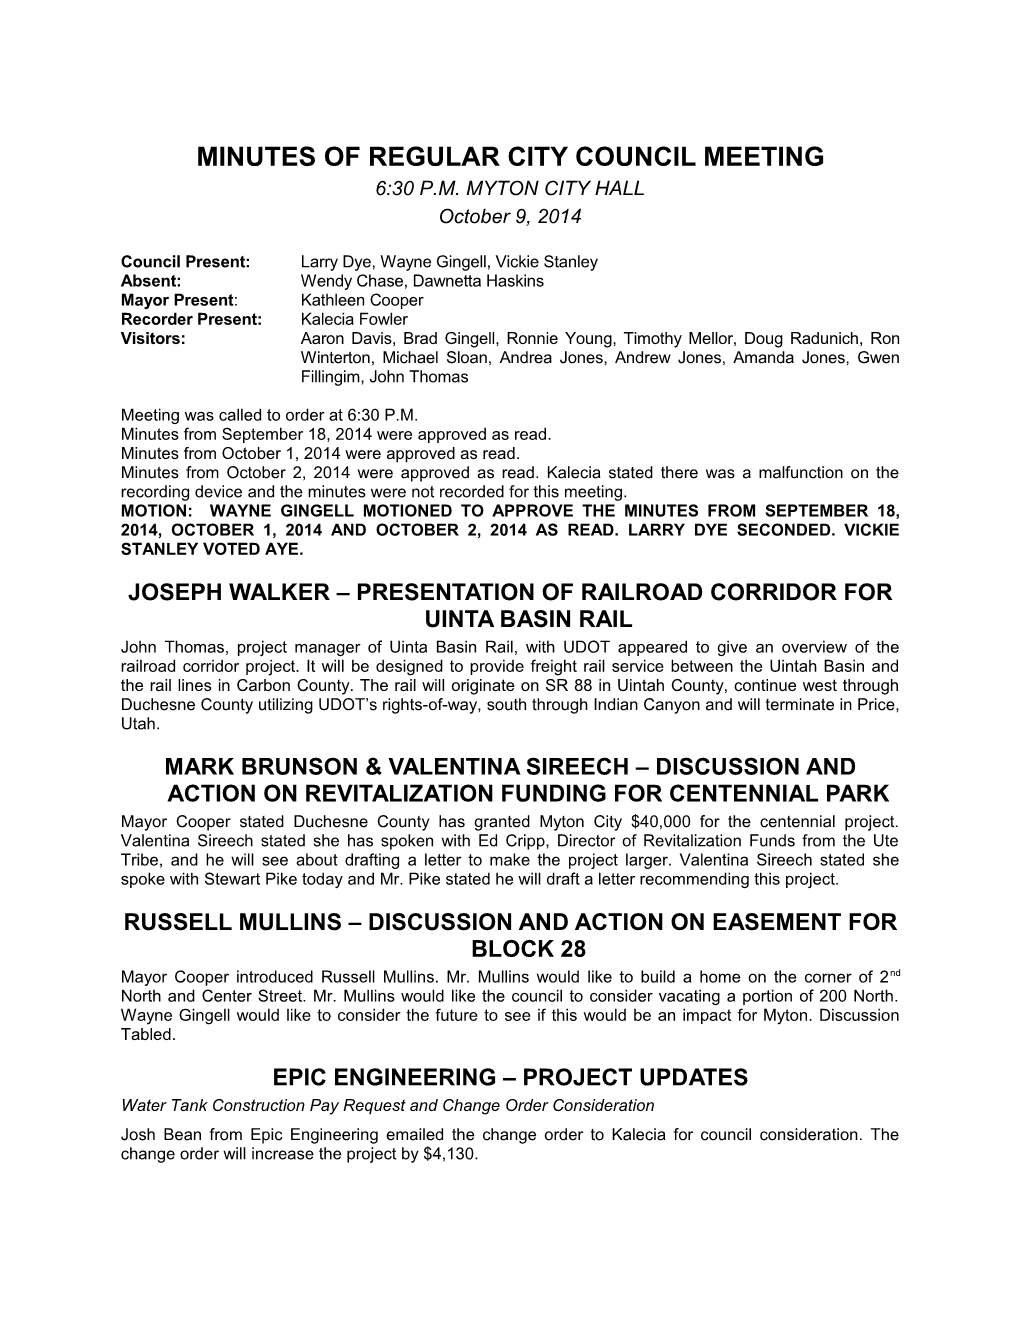 Minutes of Regular City Council Meeting